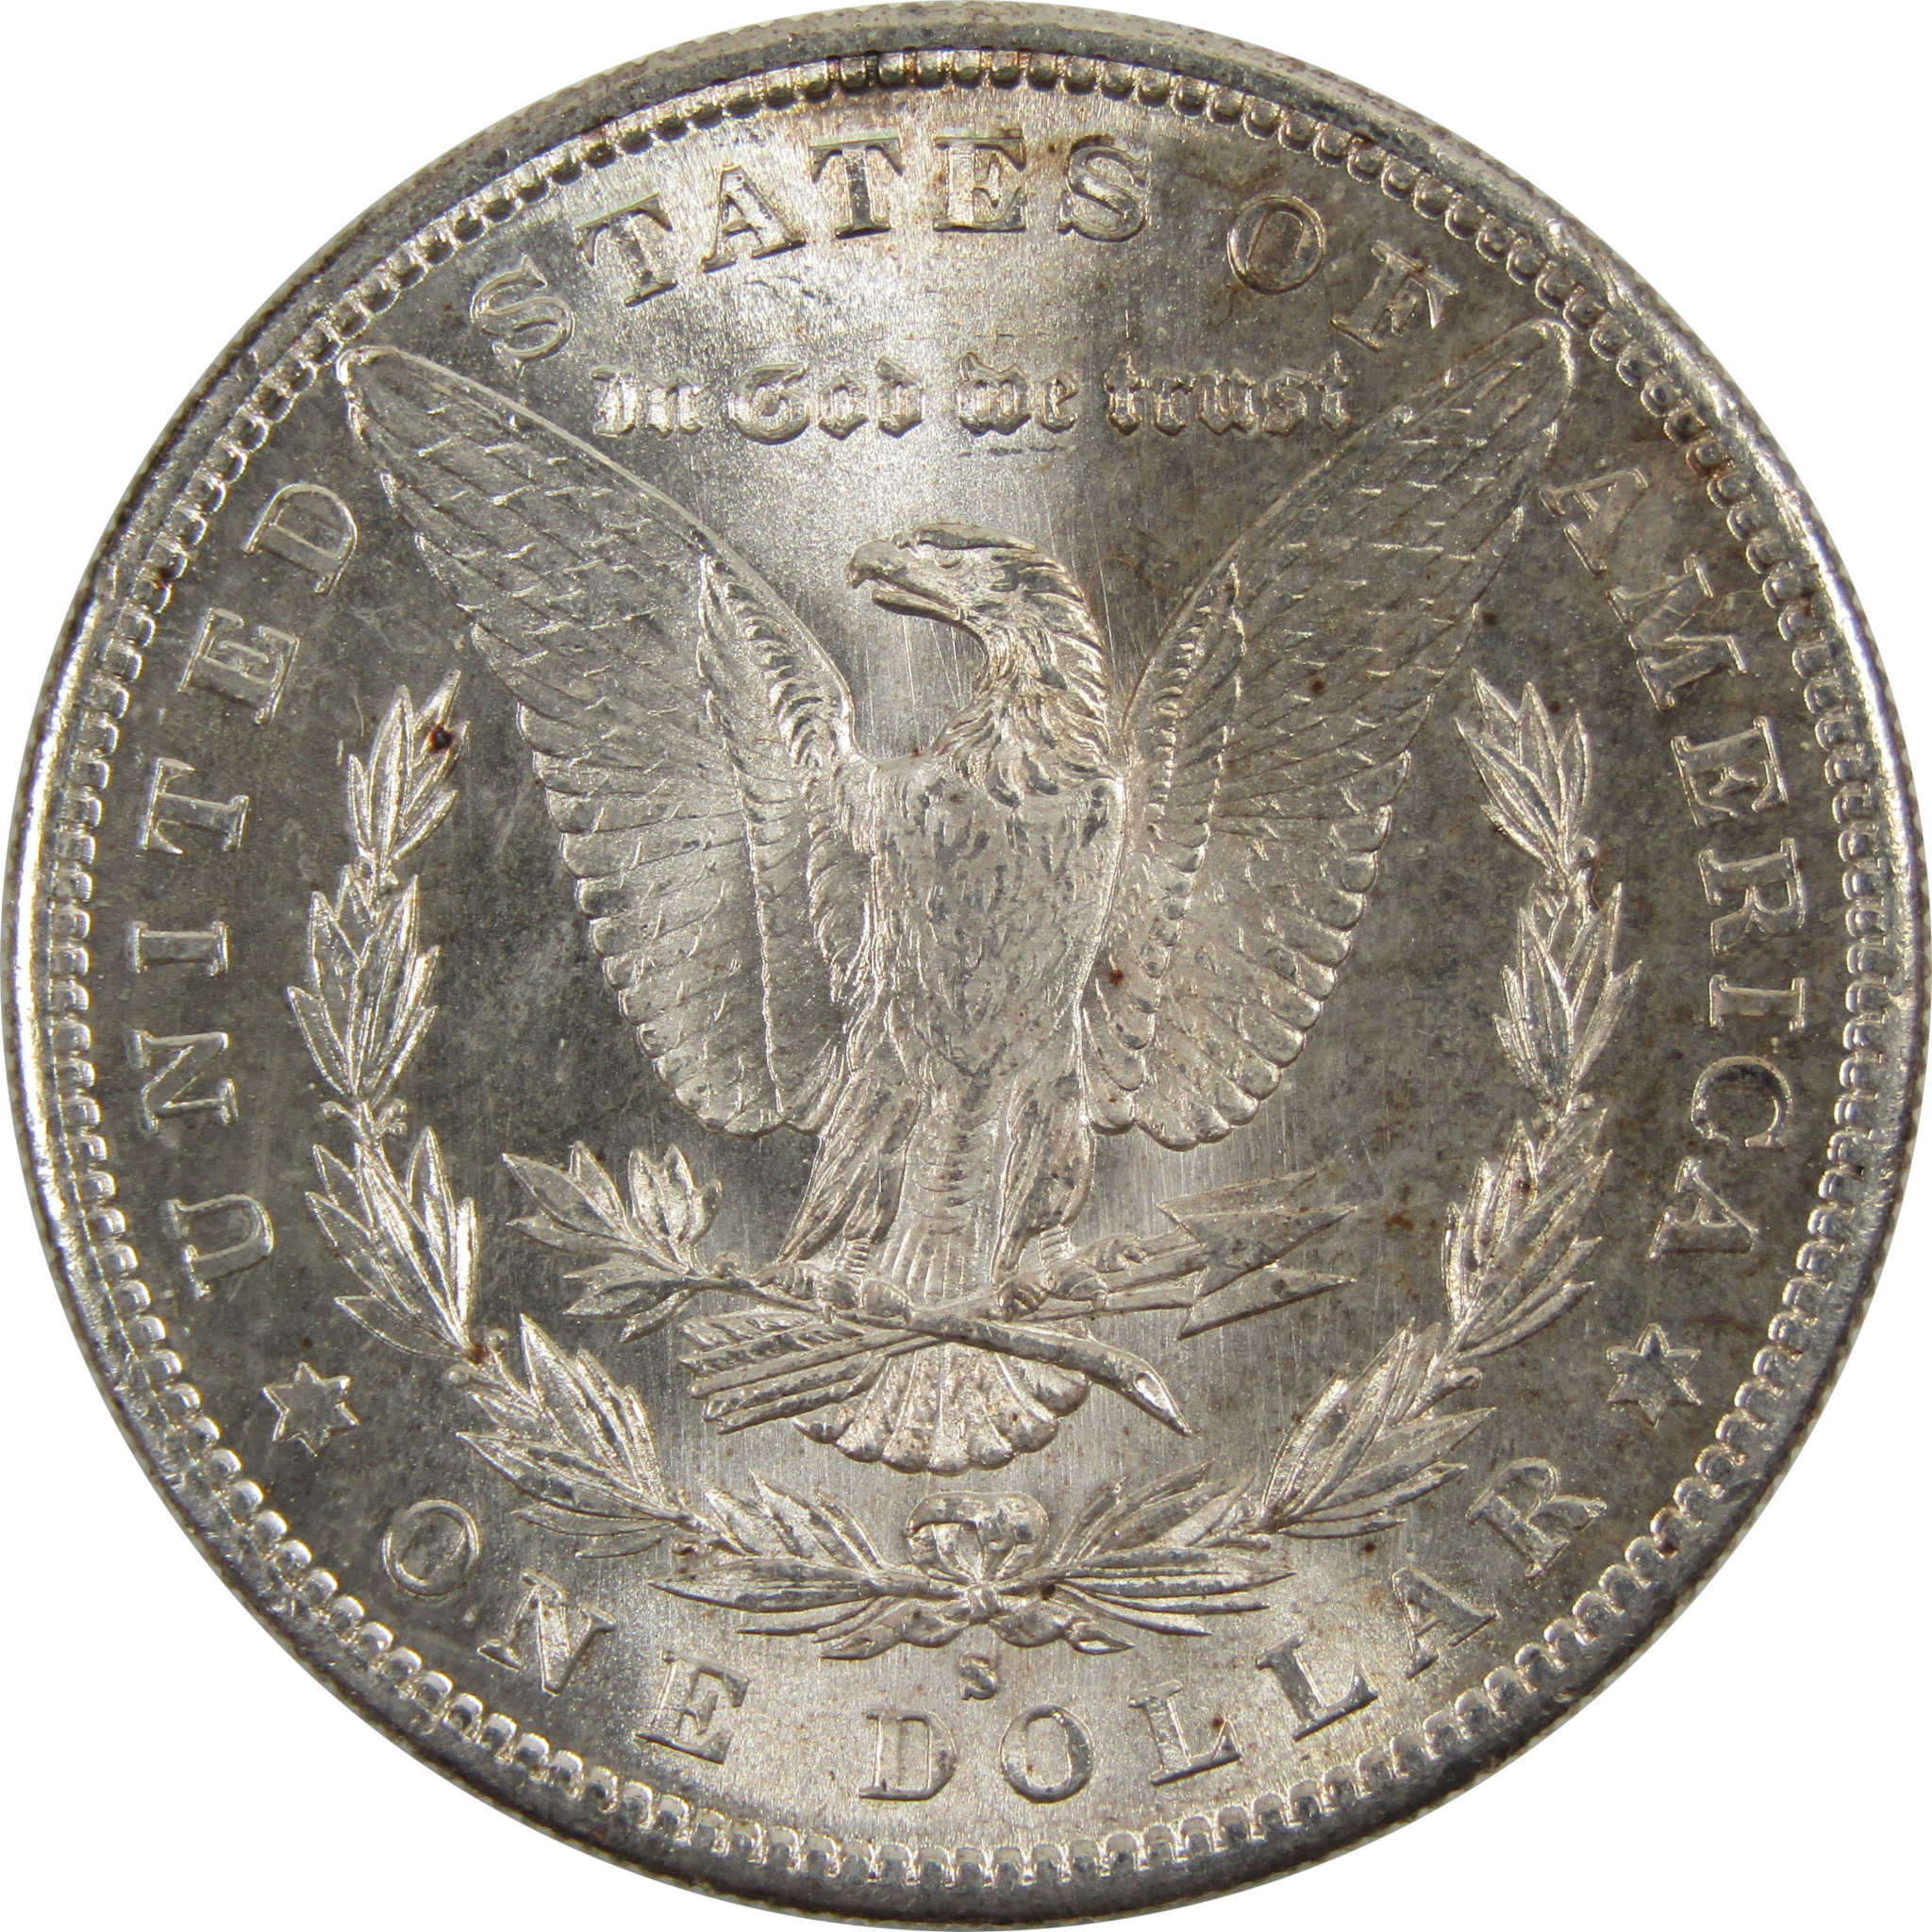 1880 S Morgan Dollar BU Uncirculated 90% Silver $1 Coin SKU:I8236 - Morgan coin - Morgan silver dollar - Morgan silver dollar for sale - Profile Coins &amp; Collectibles